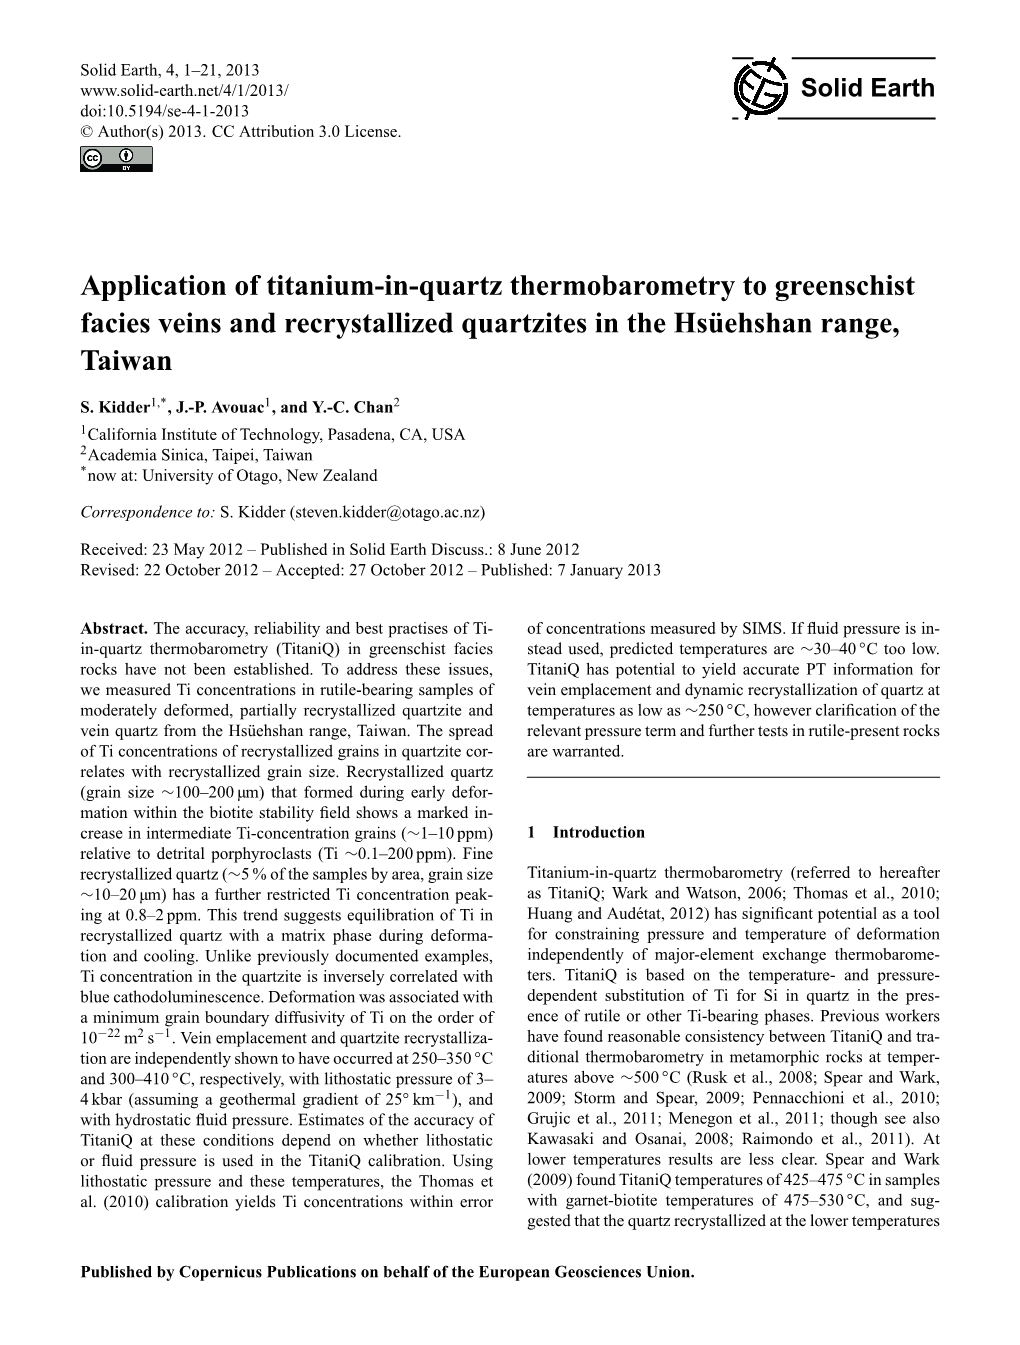 Application of Titanium-In-Quartz Thermobarometry to Greenschist Facies Veins and Recrystallized Quartzites in the Hsuehshan¨ Range, Taiwan